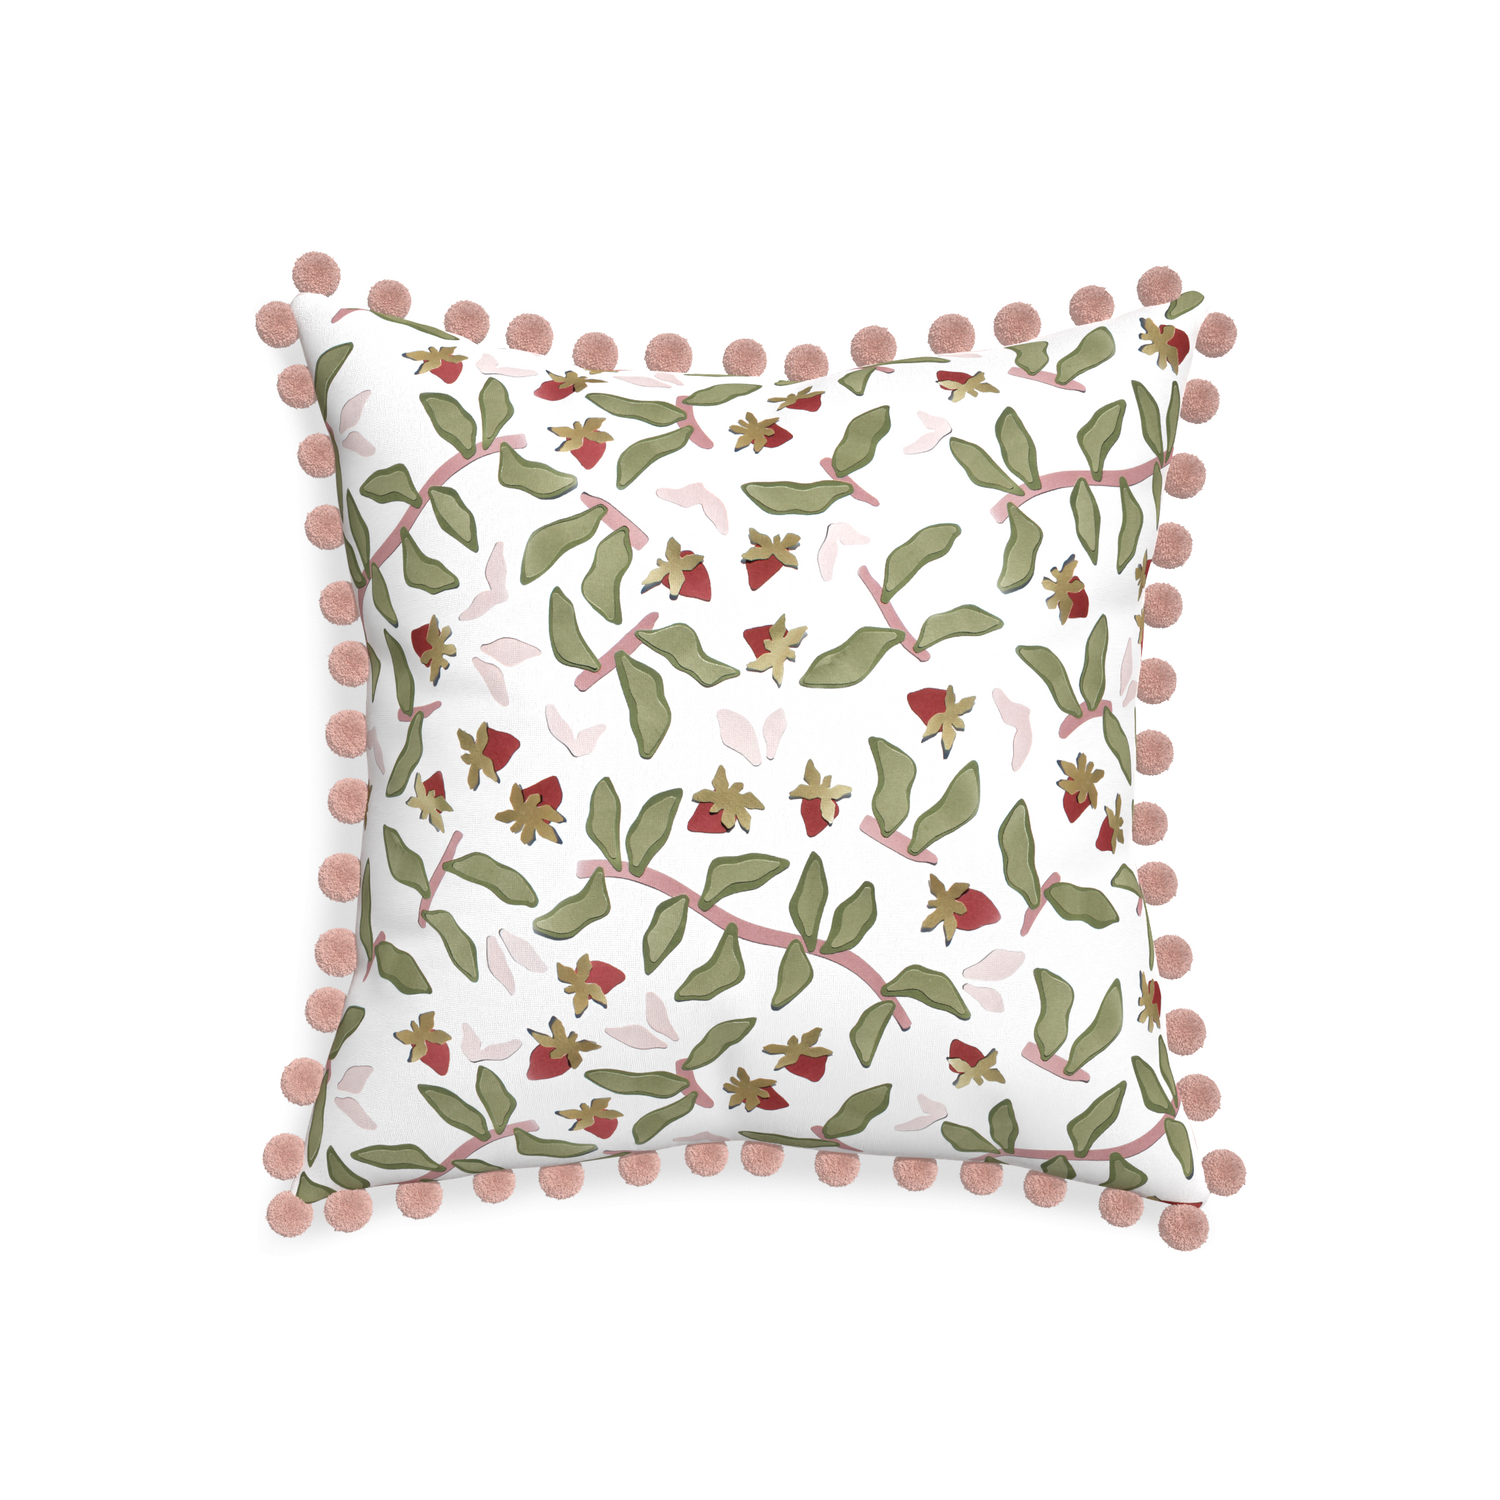 20-square nellie custom strawberry & botanicalpillow with rose pom pom on white background